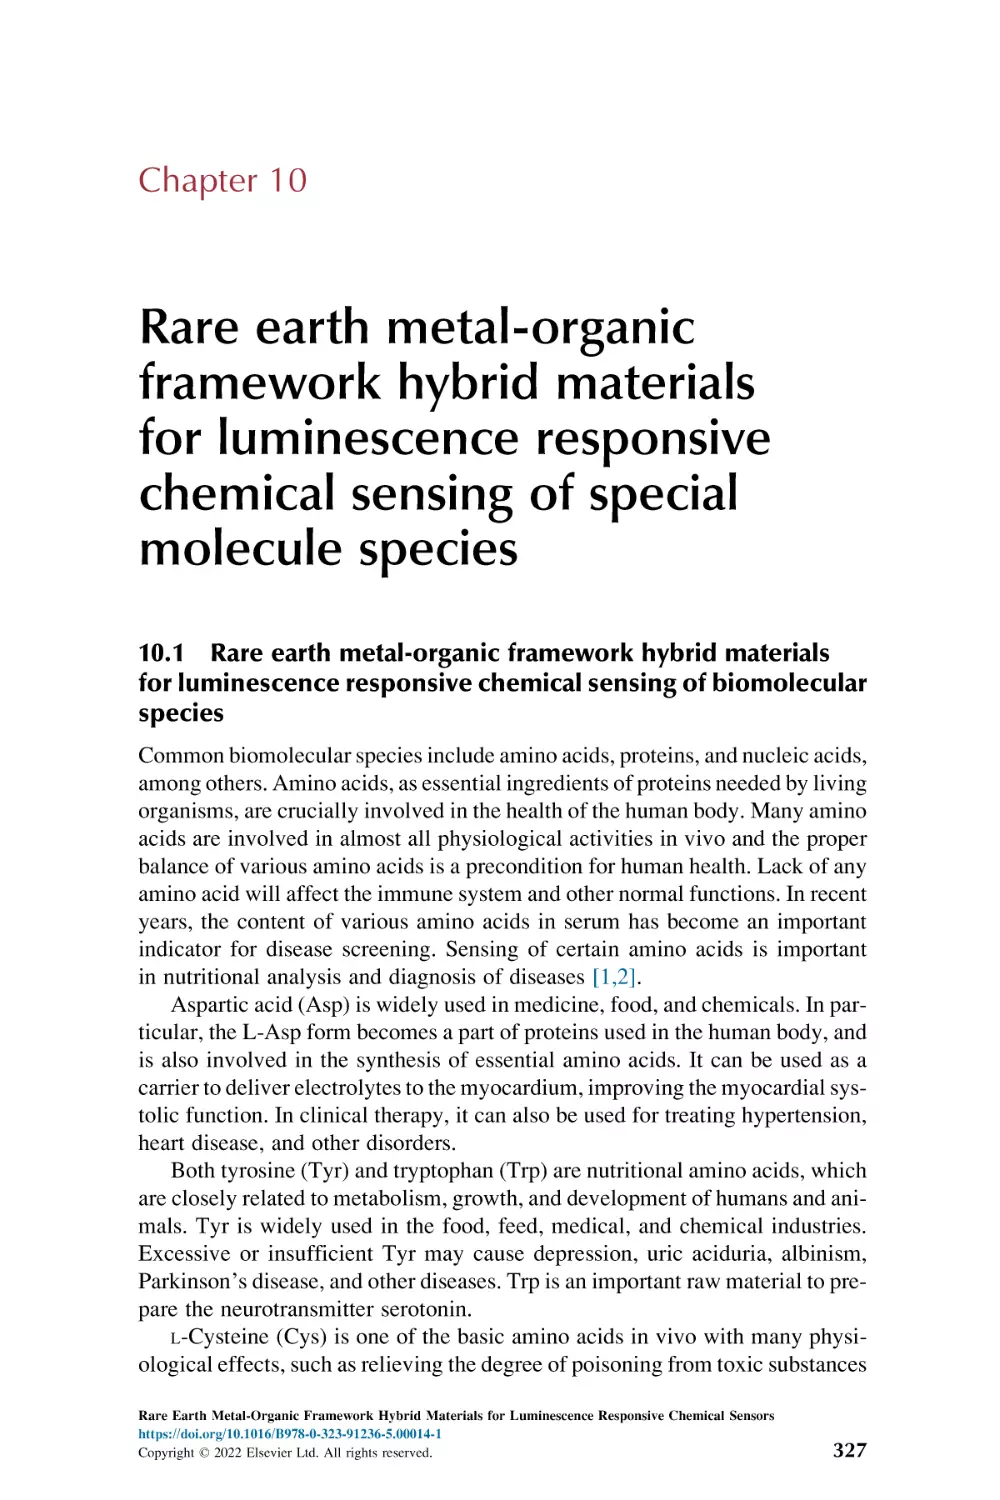 Chapter 10
10.1. Rare earth metal-organic framework hybrid materials for luminescence responsive chemical sensing of biomolecular sp ...